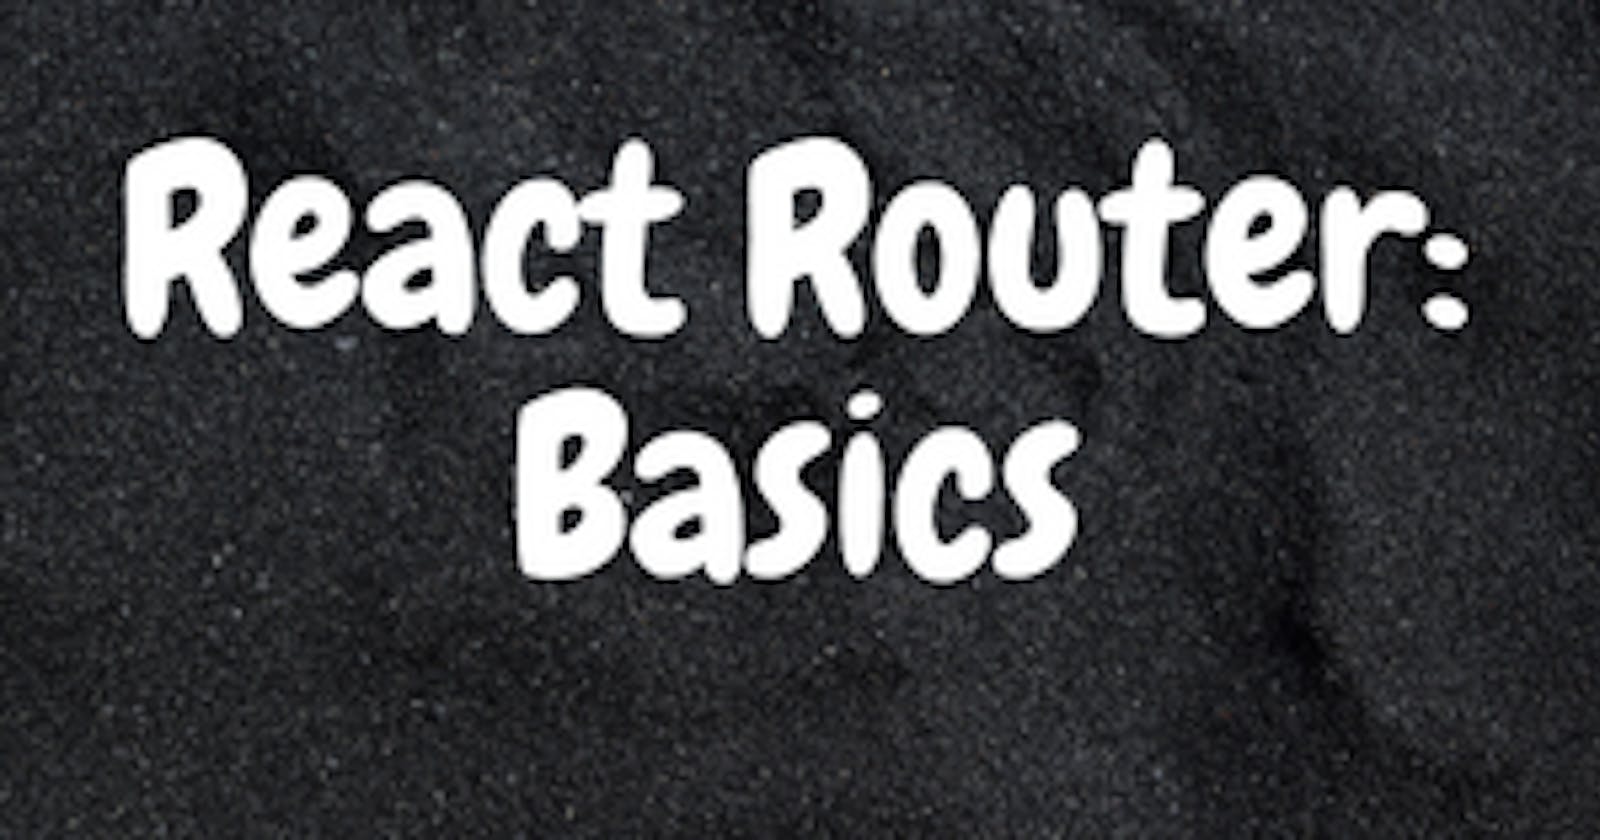 React Router: Basics